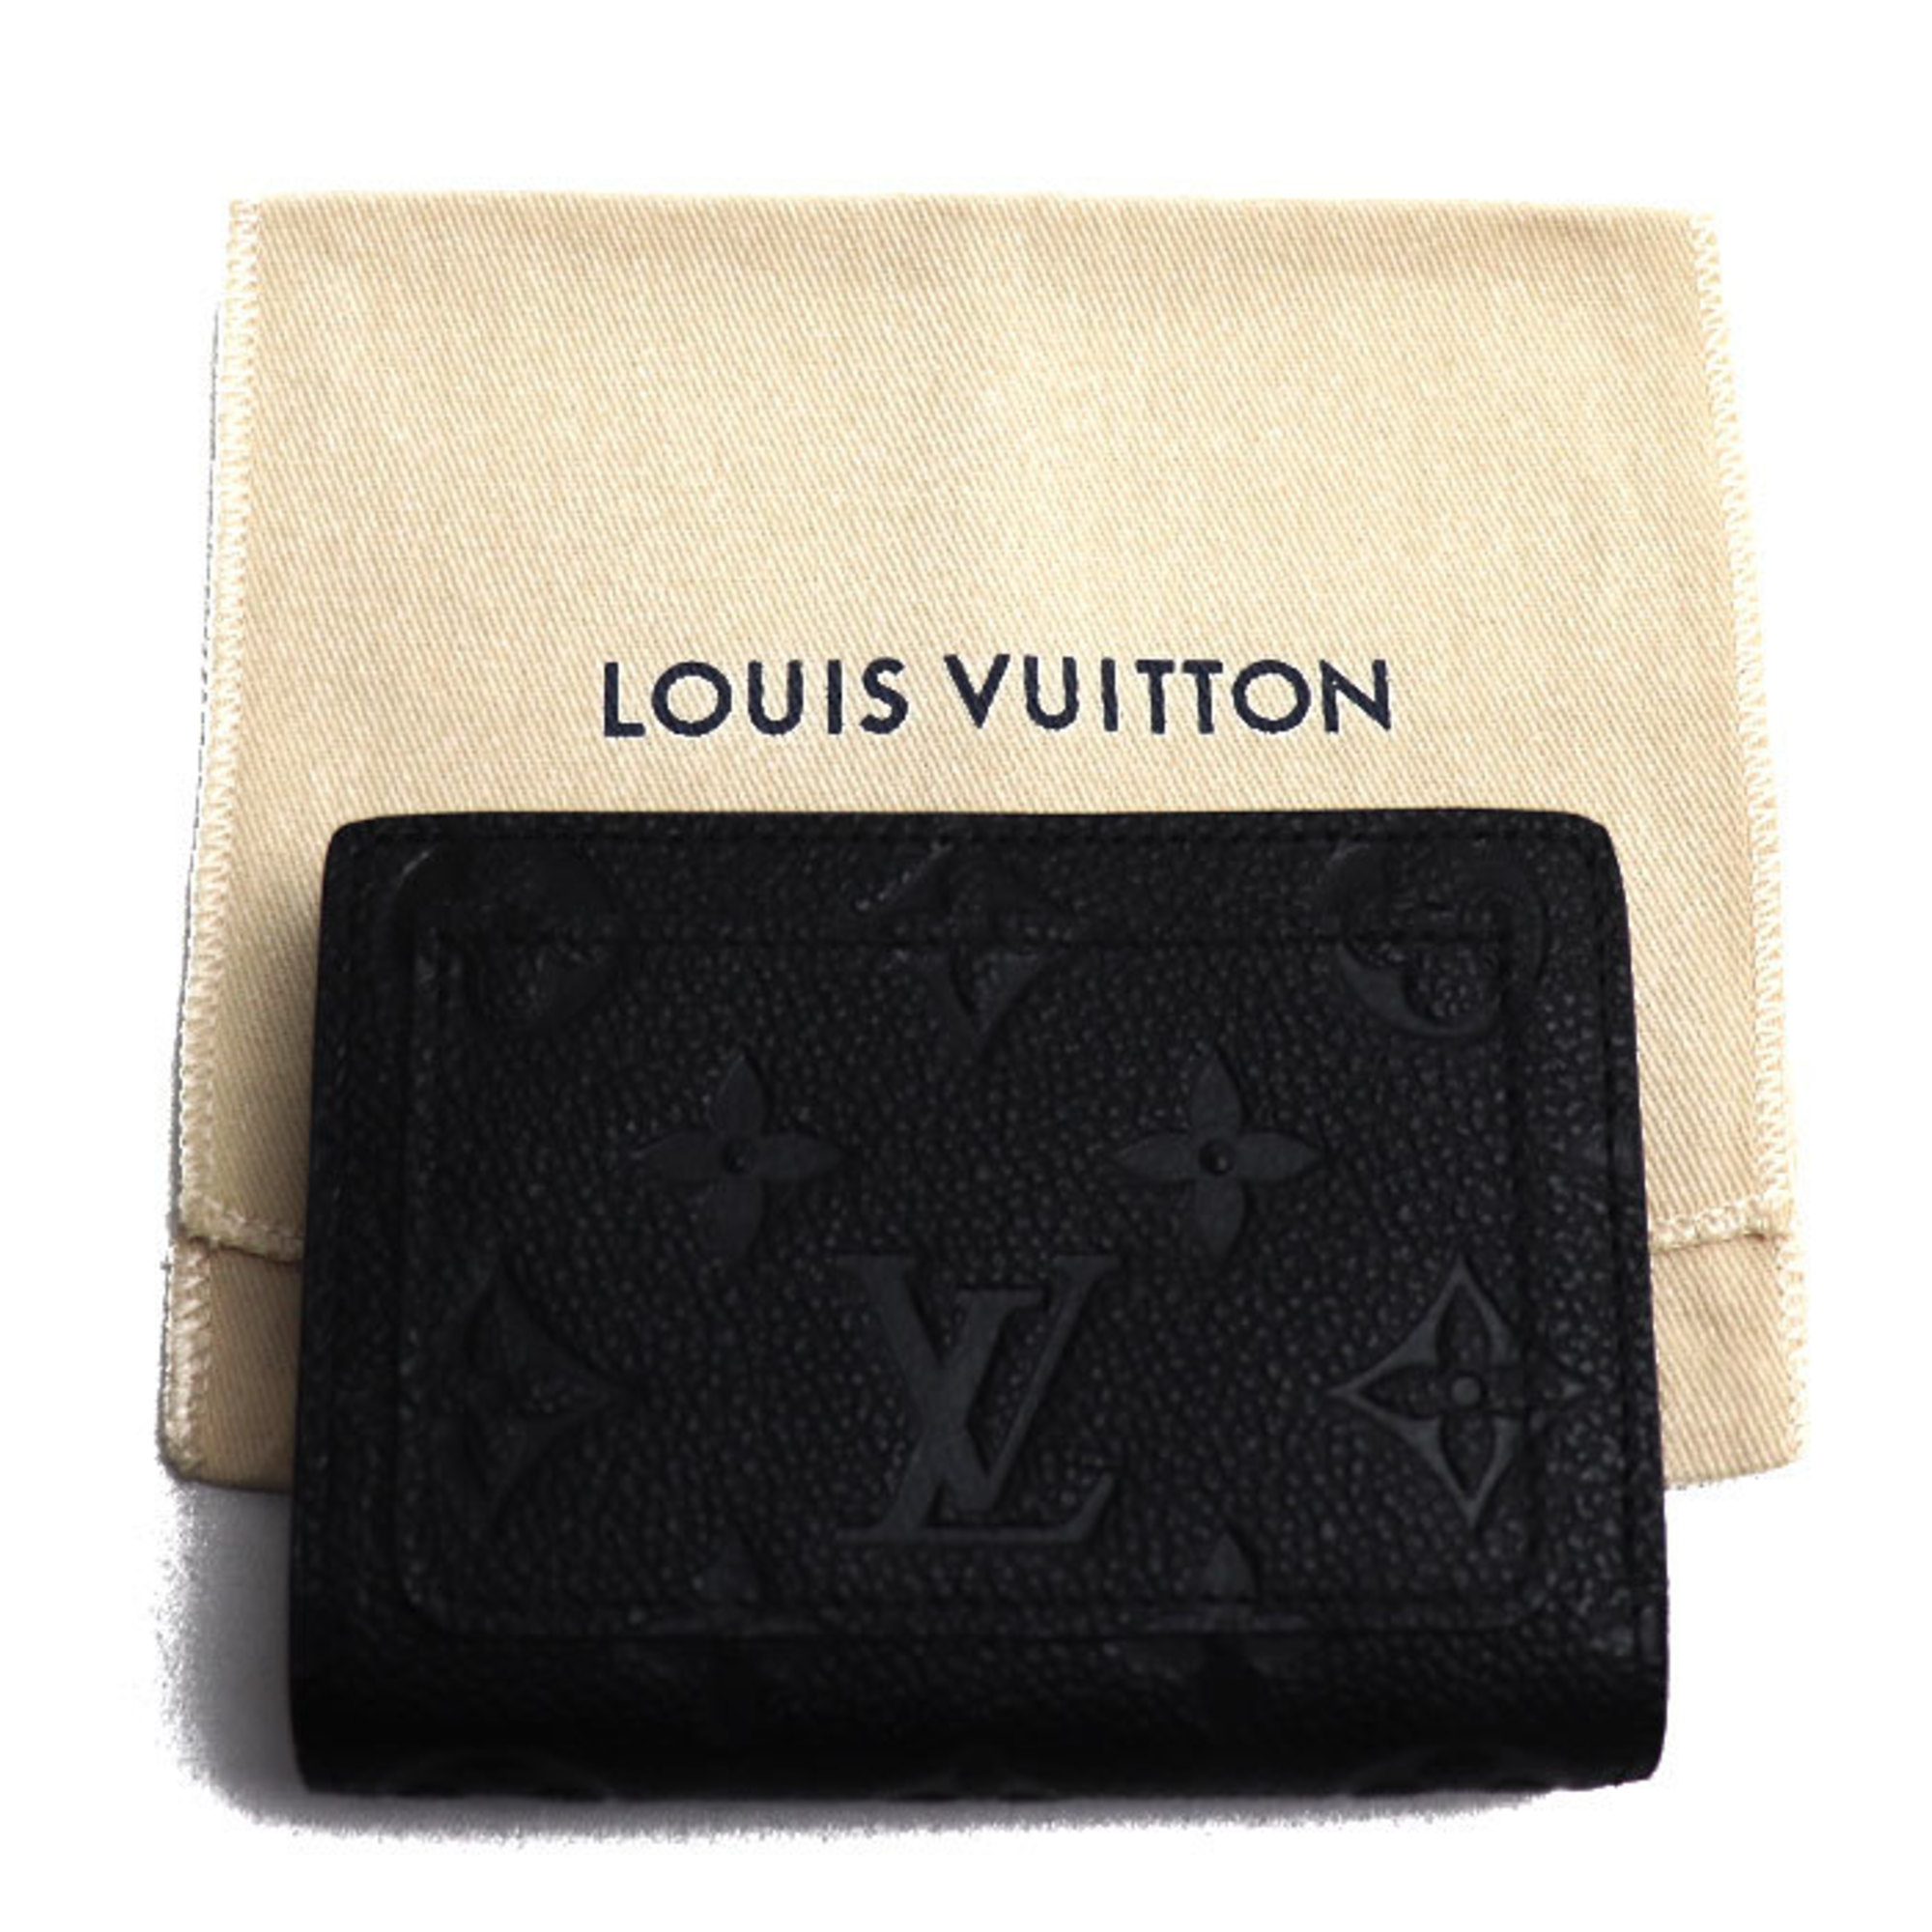 LOUIS VUITTON Portefeuille Bifold Wallet Empreinte Black M80151 IC Chip Ladies